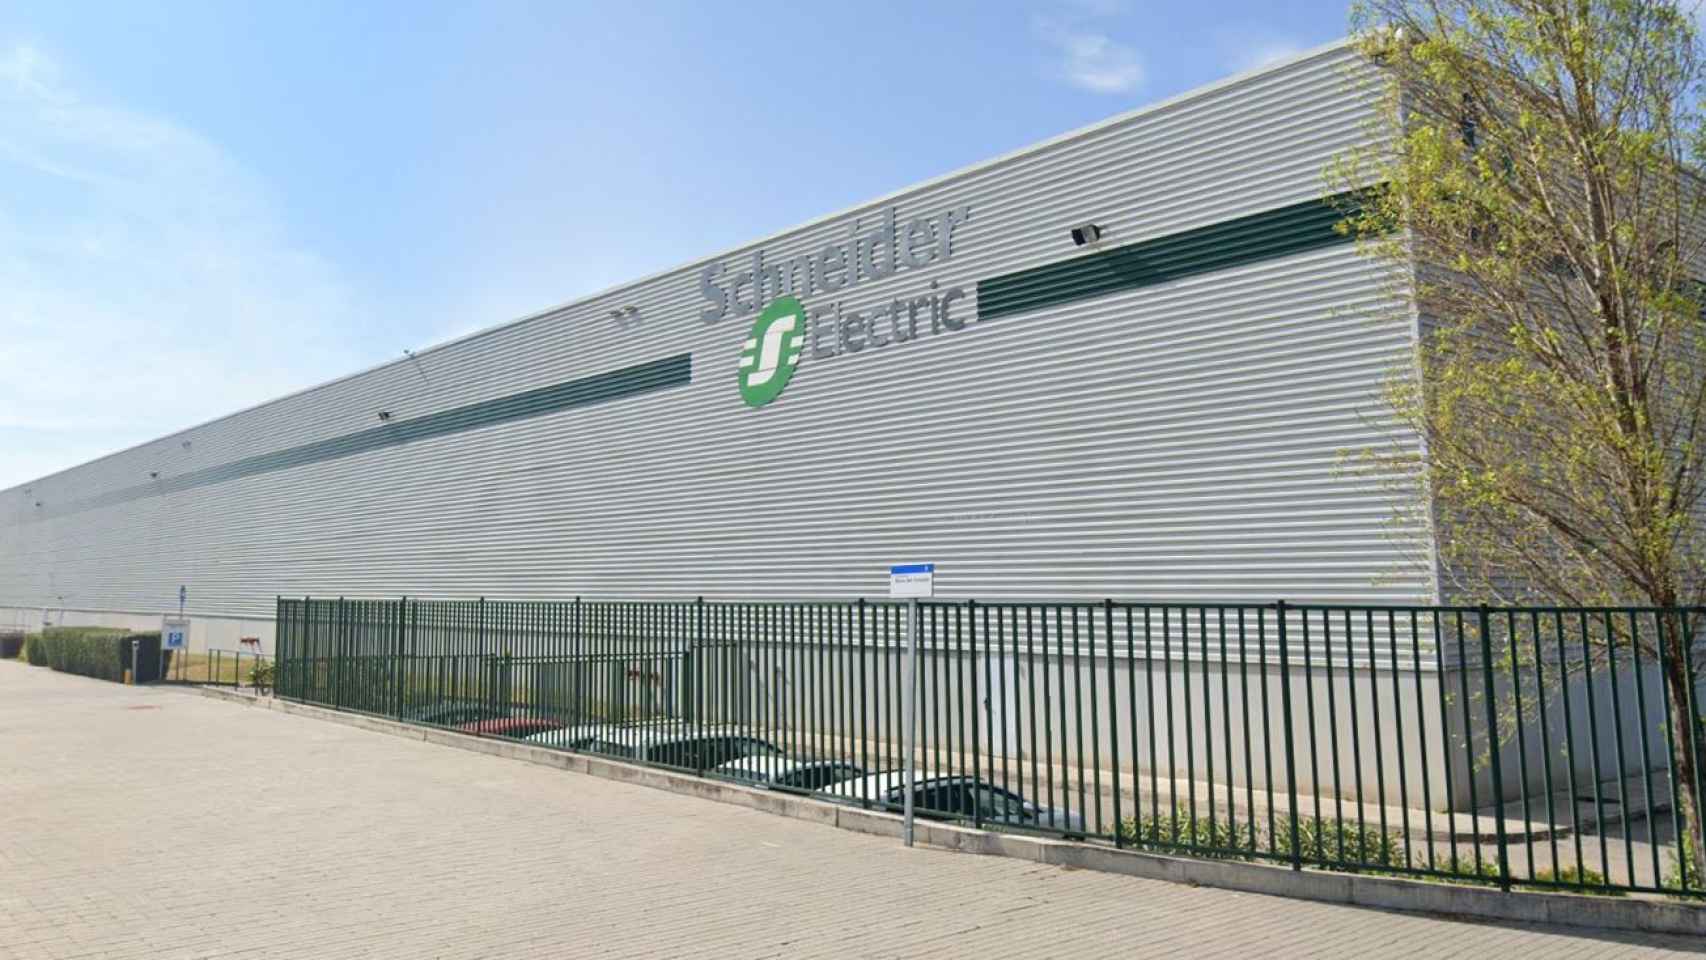 Almacén de Schneider Electric en Sant Boi de Llobregat / CG